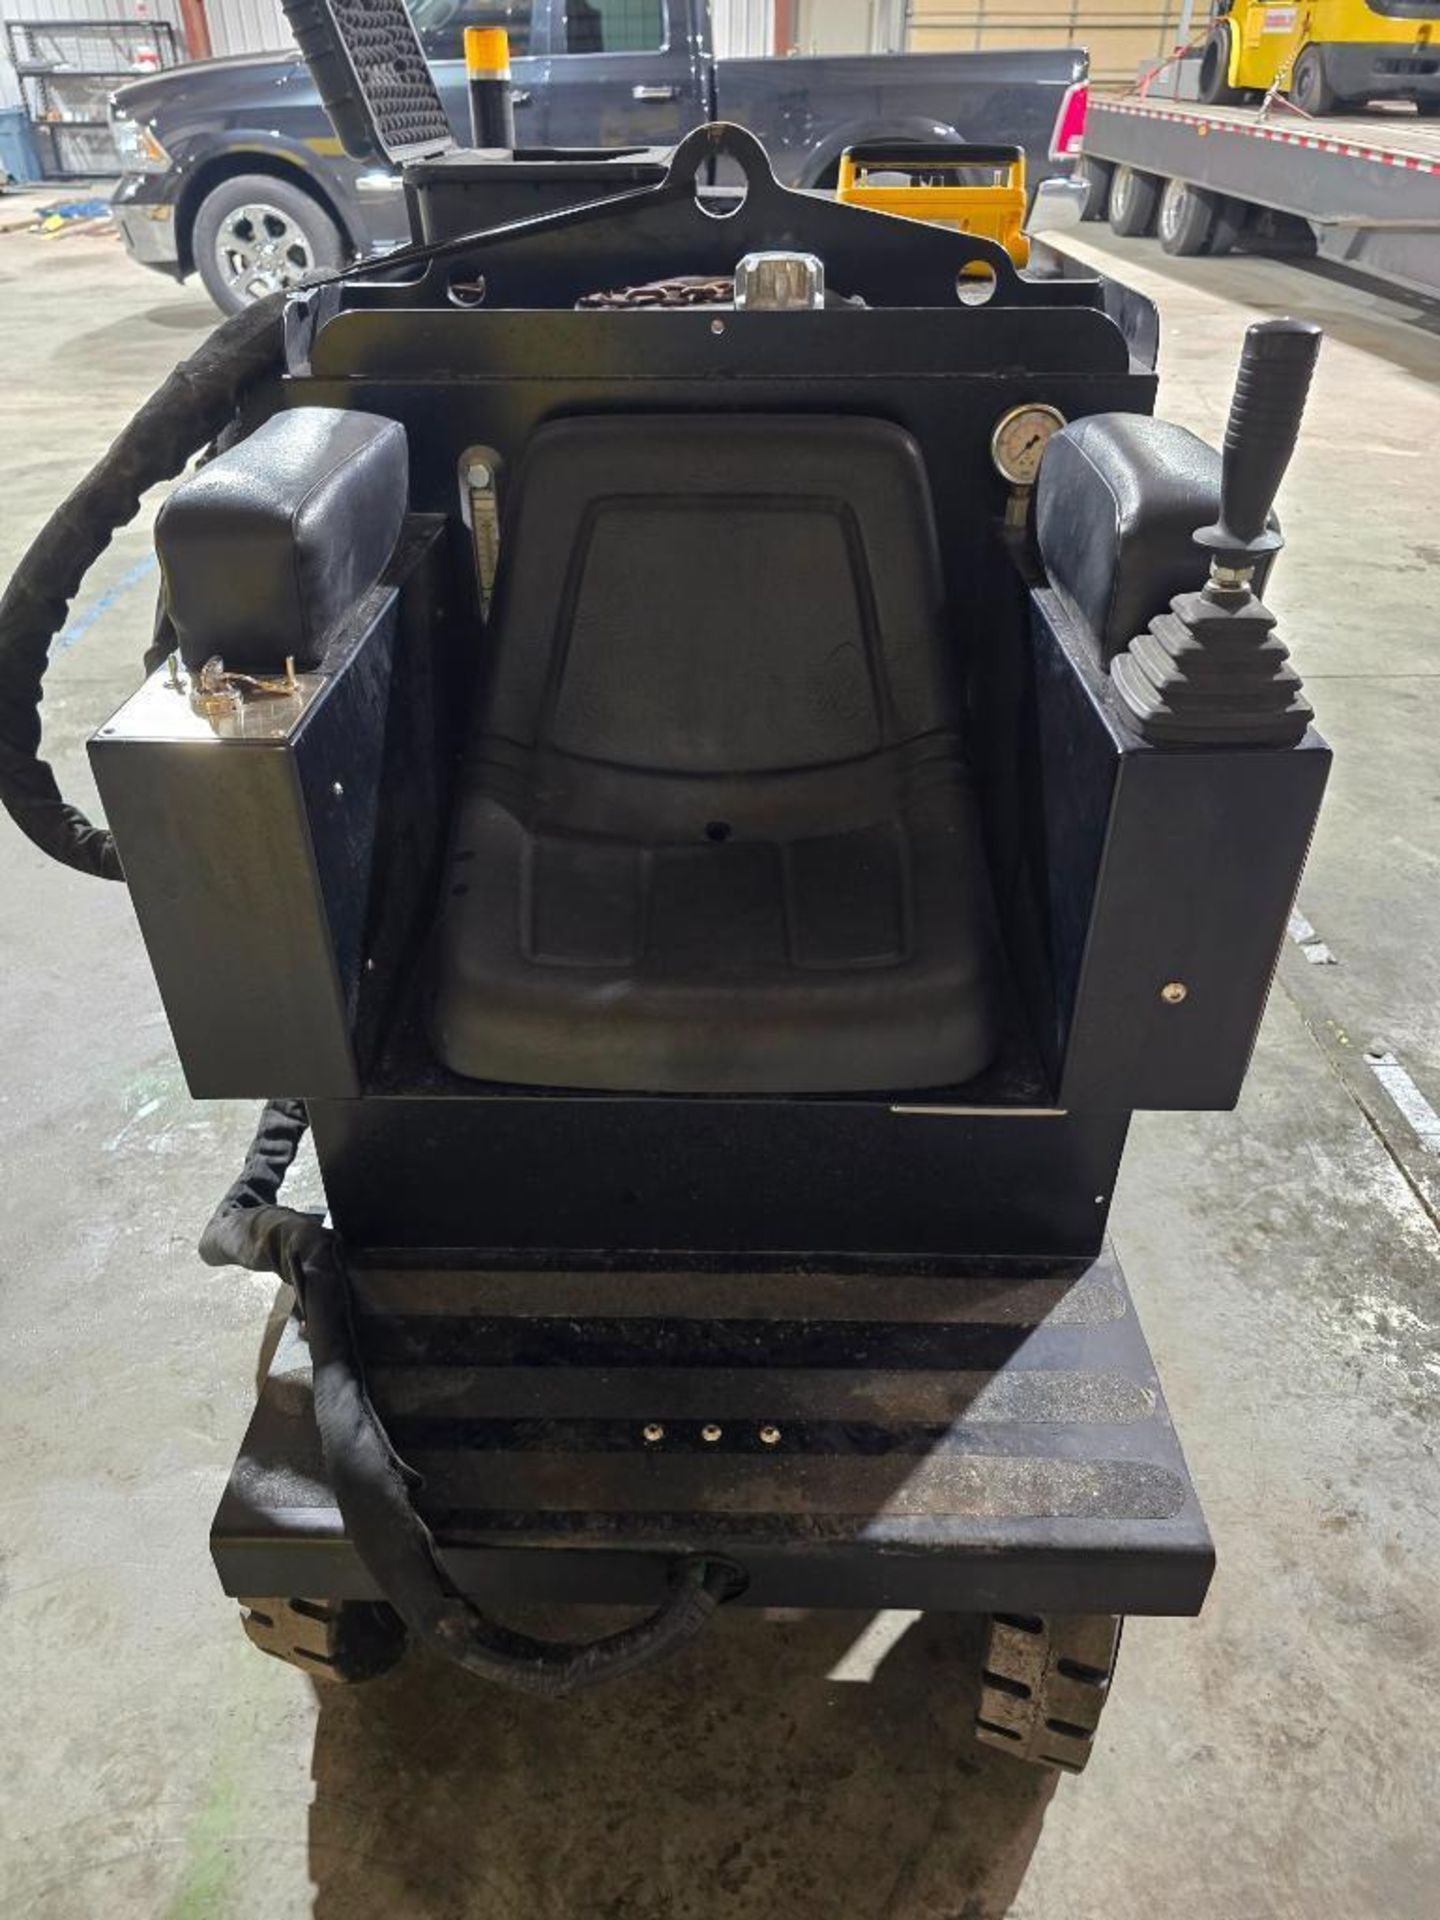 Hilman Traksporter Power Cart, LP, Remote Control Machine Skate, 60,000 LB. Capacity - Image 5 of 10